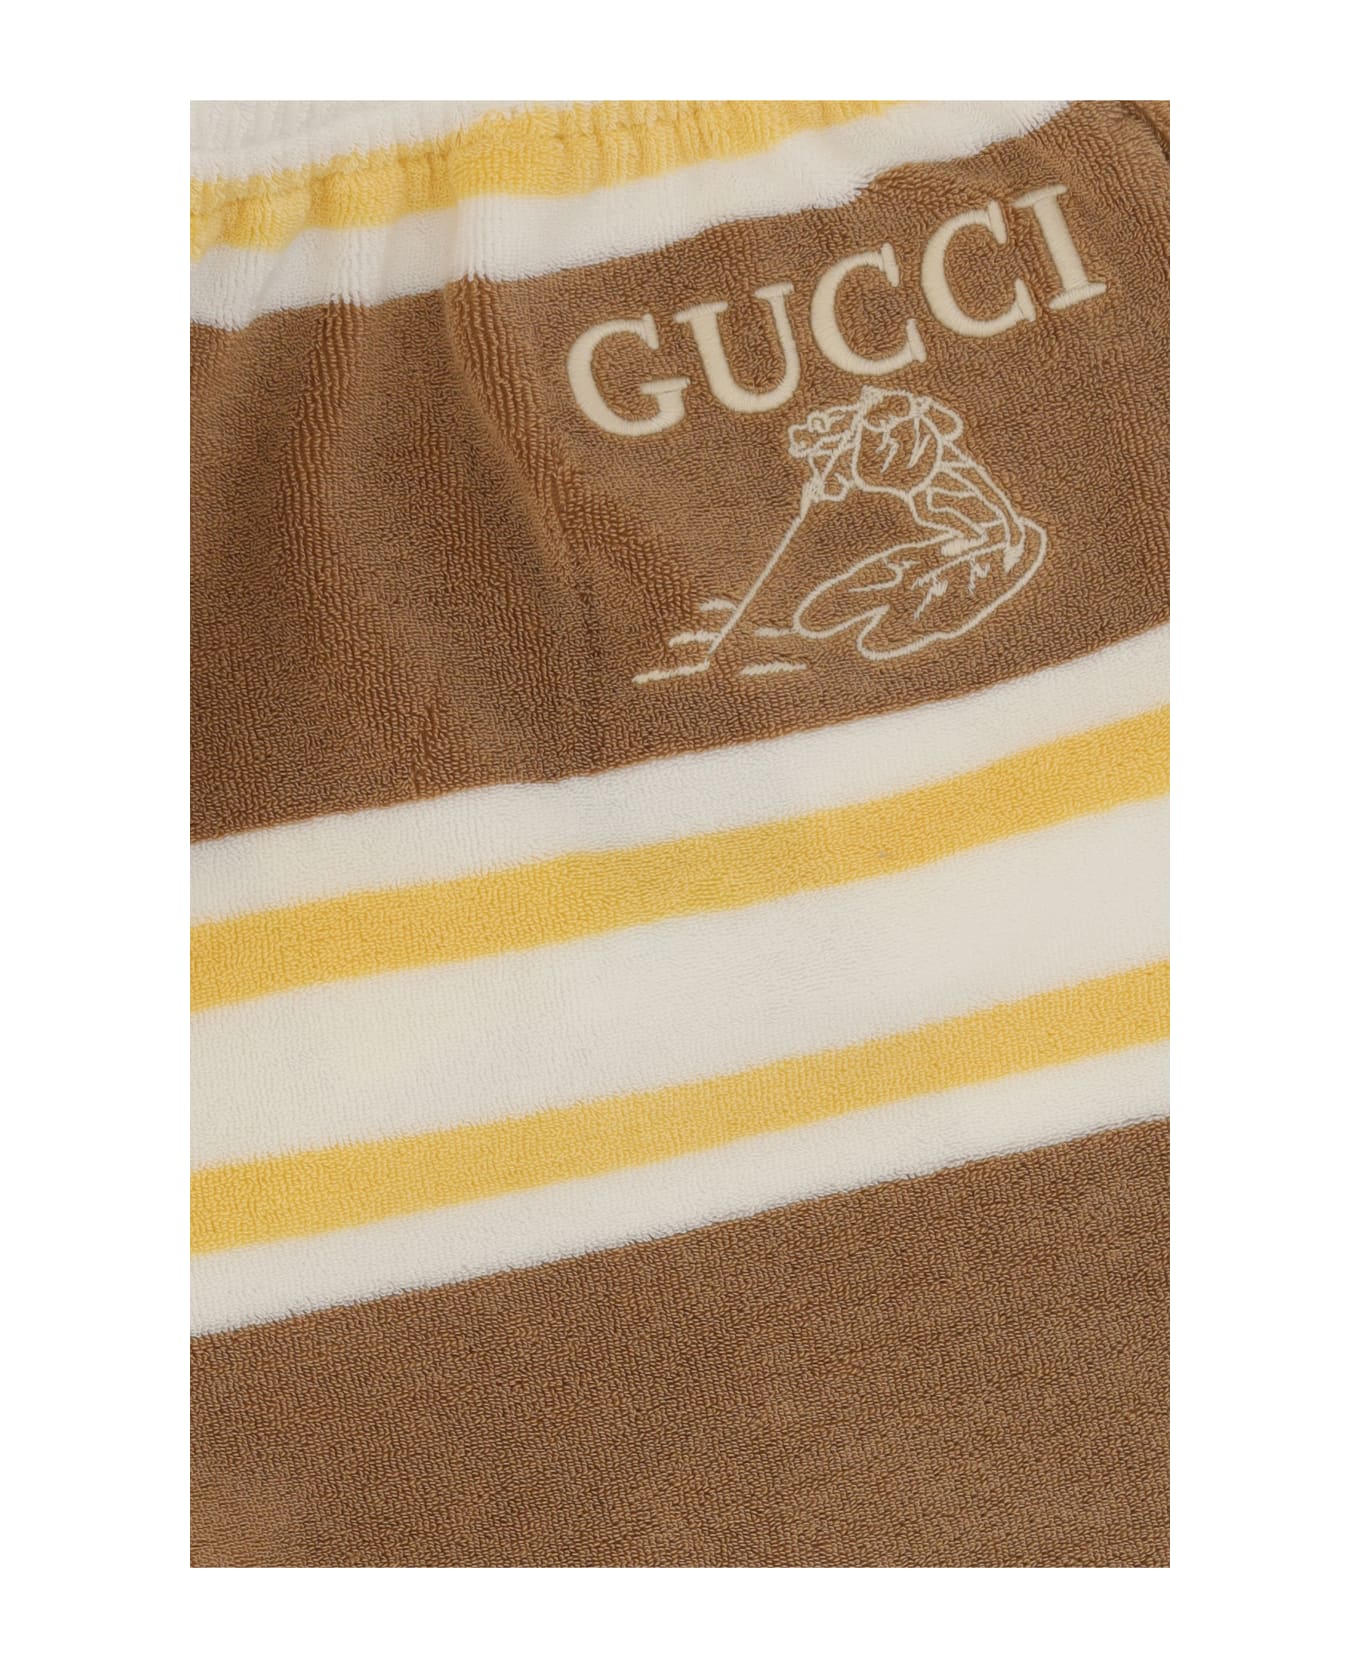 Gucci Shorts For Boy - Giallo